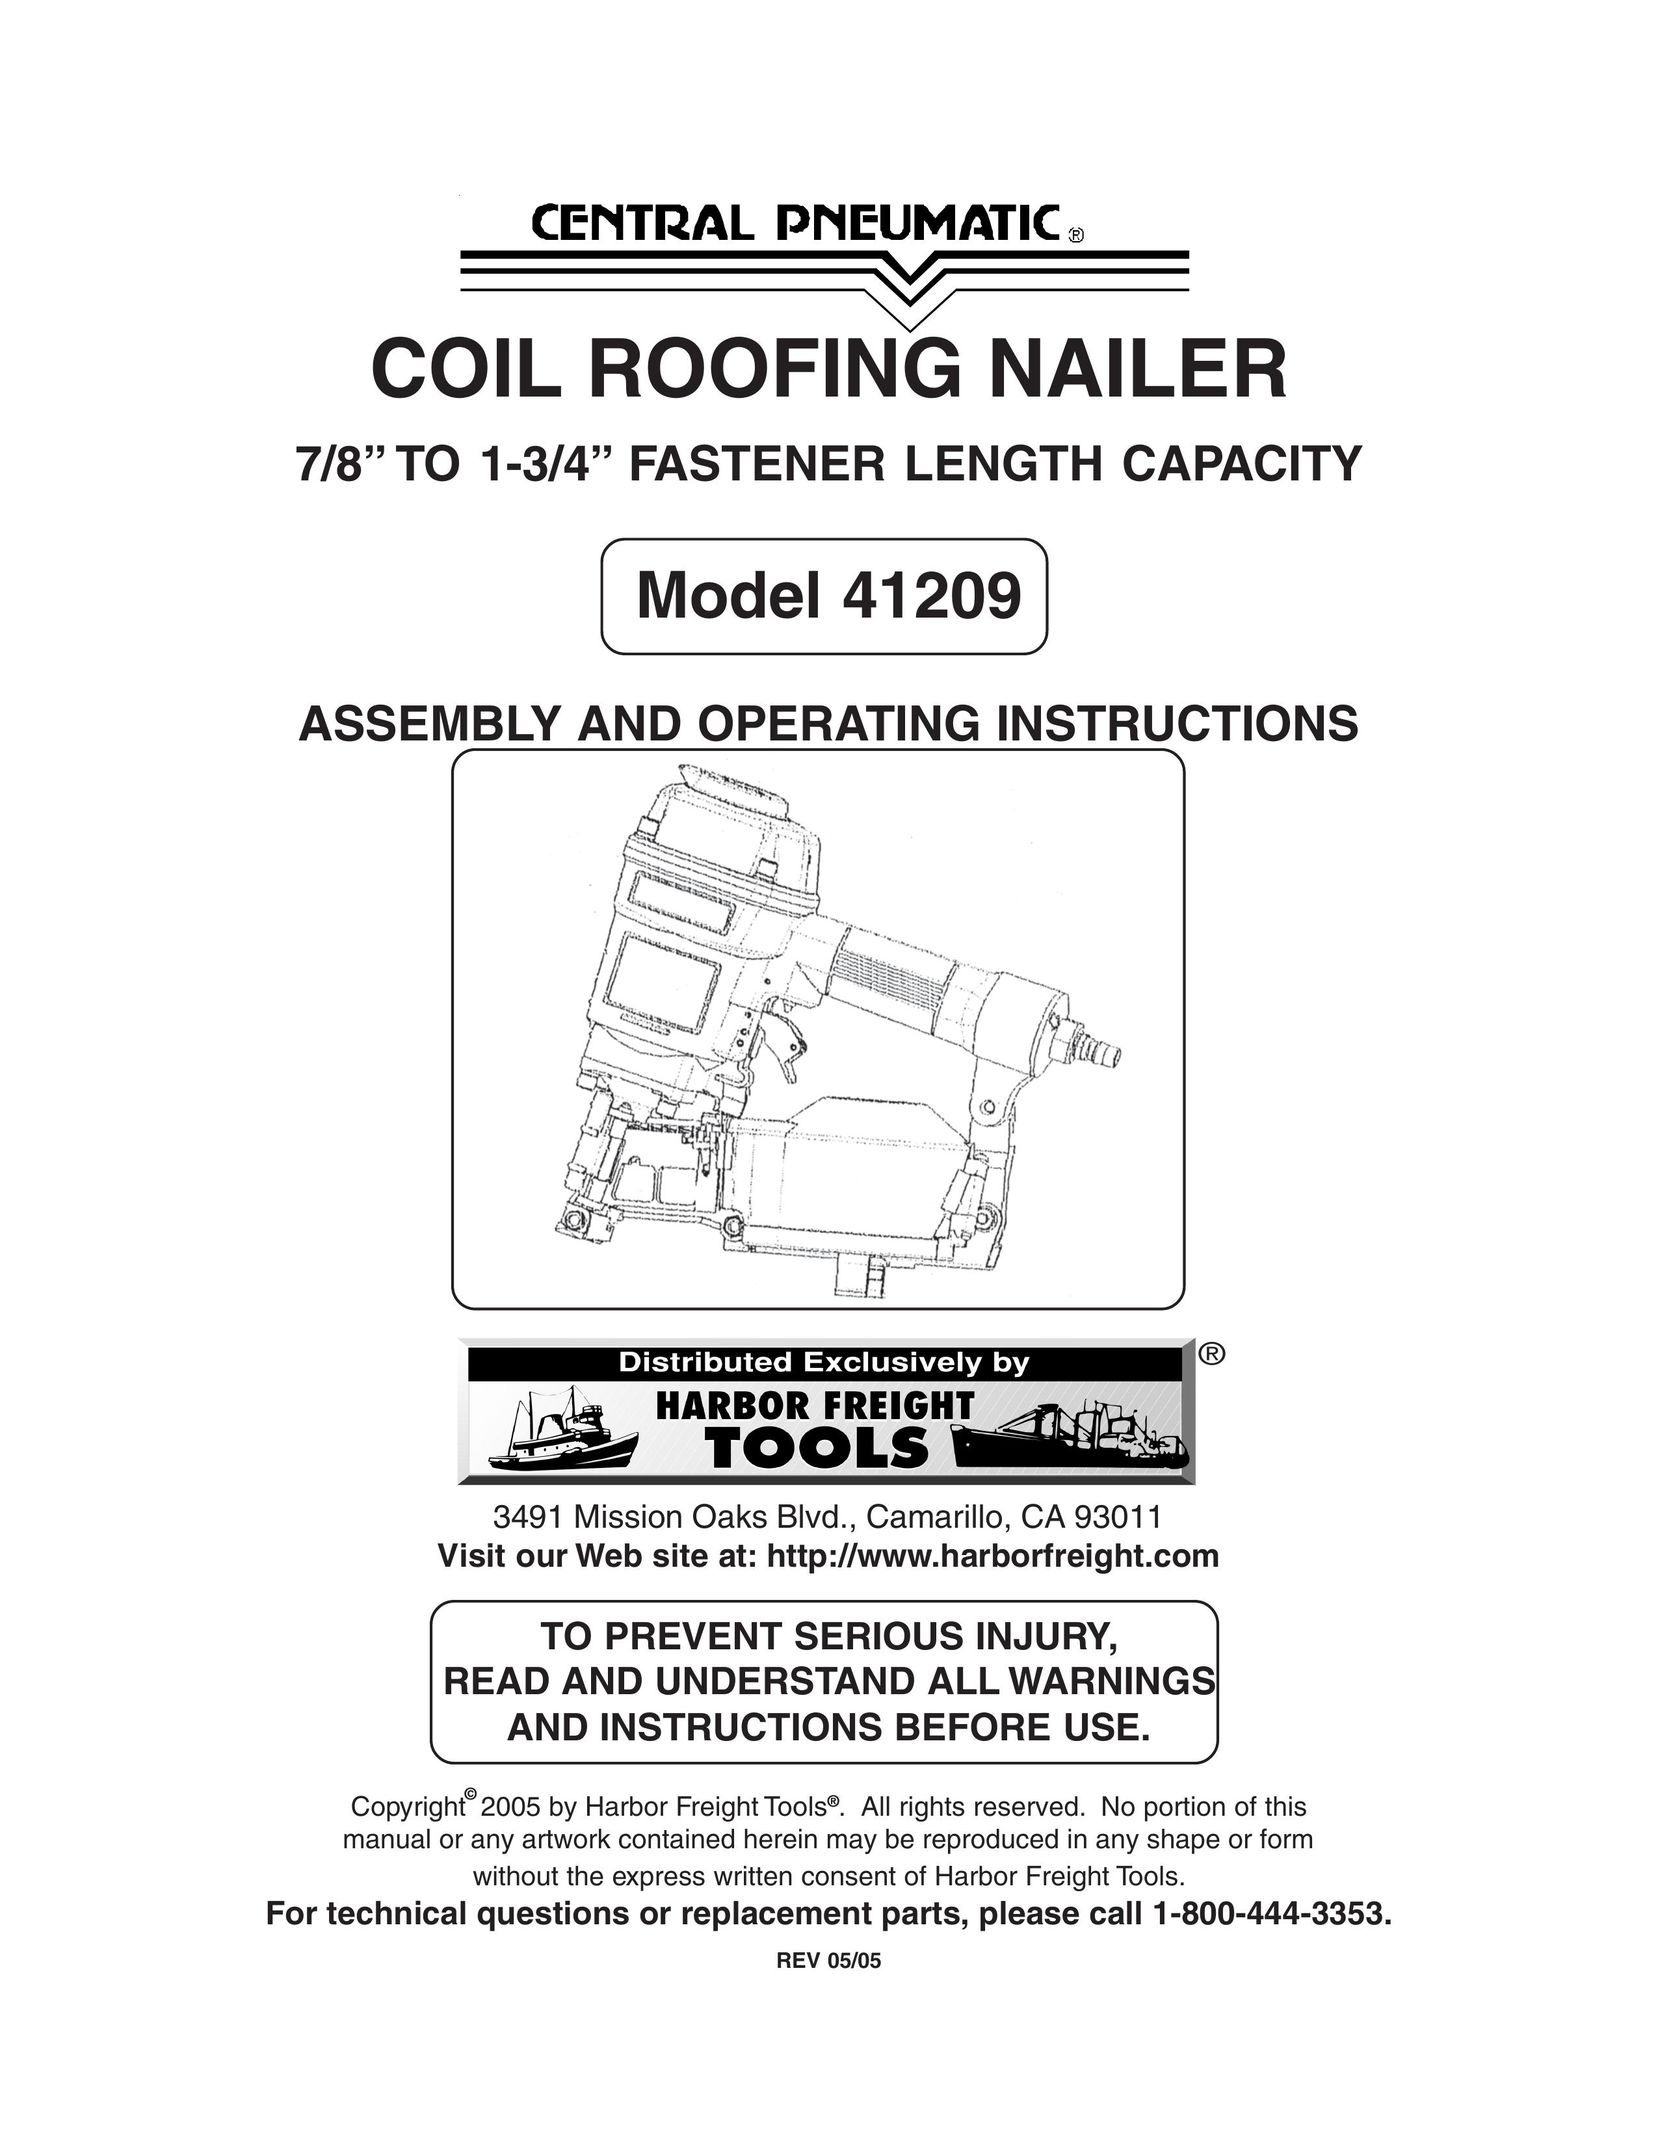 Harbor Freight Tools 41209 Nail Gun User Manual